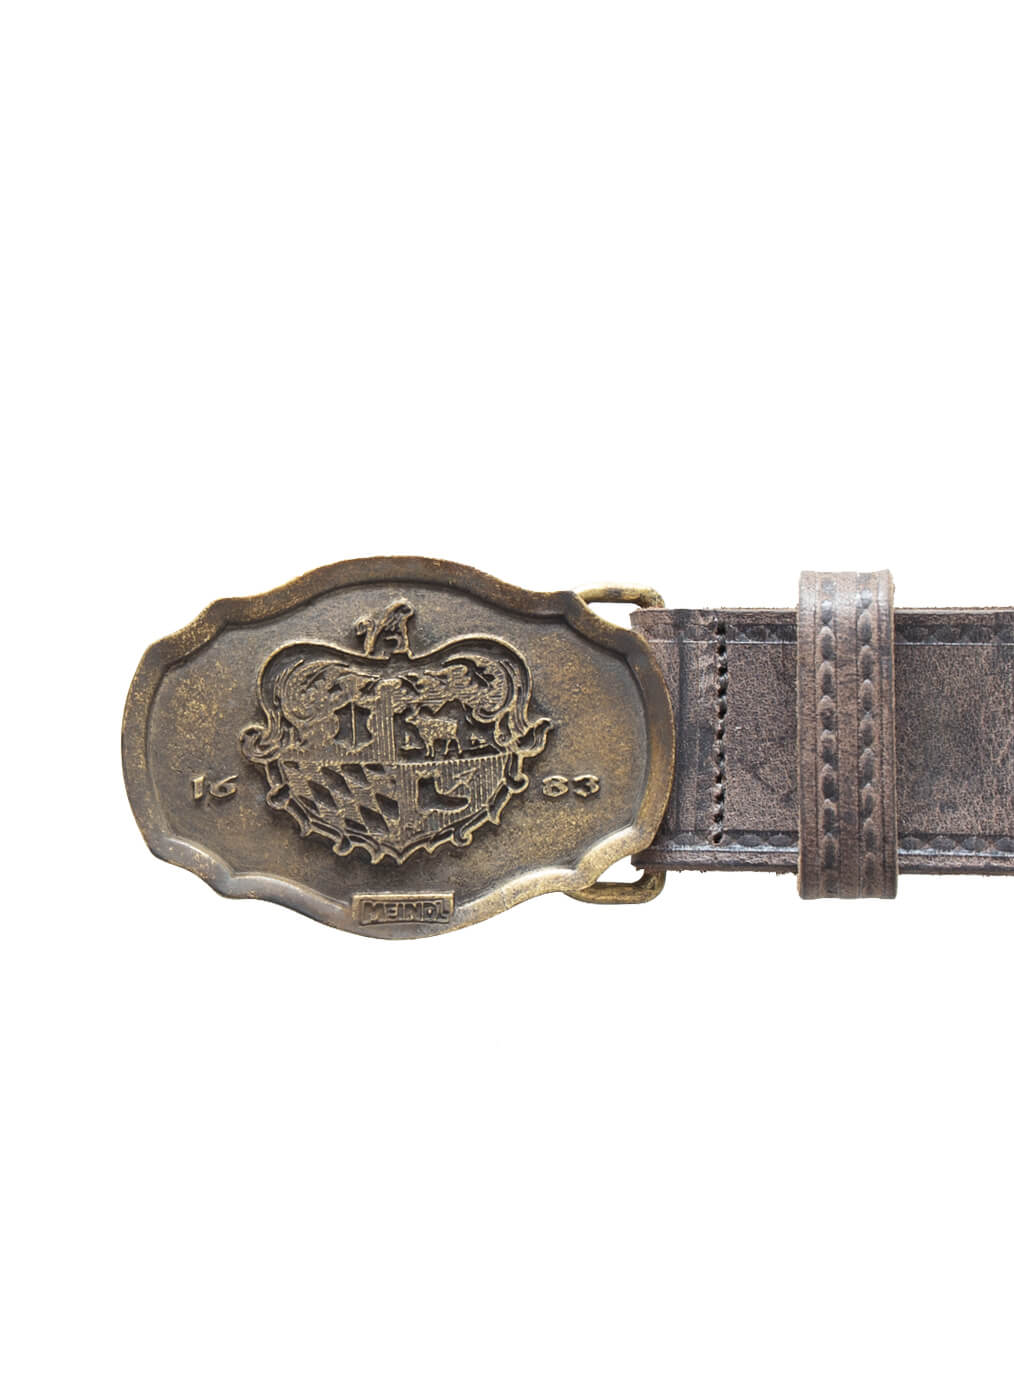 Leather Belt “Sonnblick”, altmessing antik